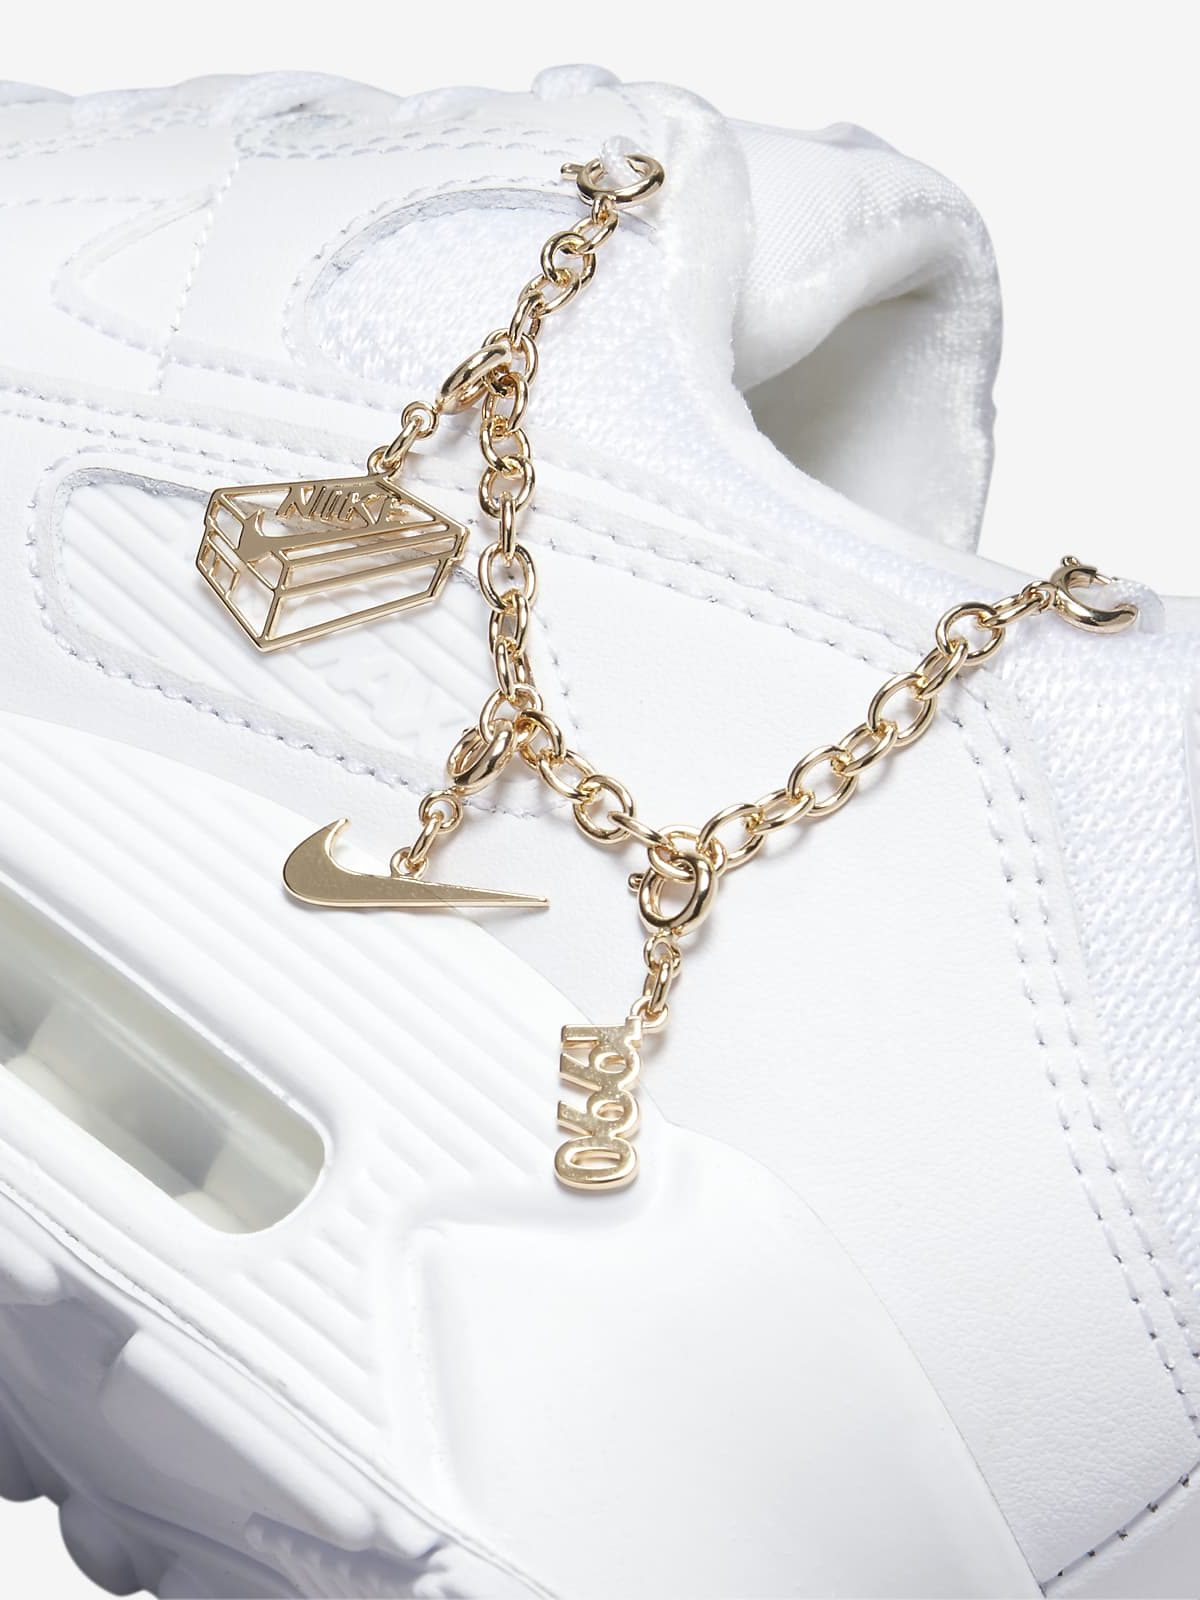 Nike Air Max 90 'White' - Lucky Charms